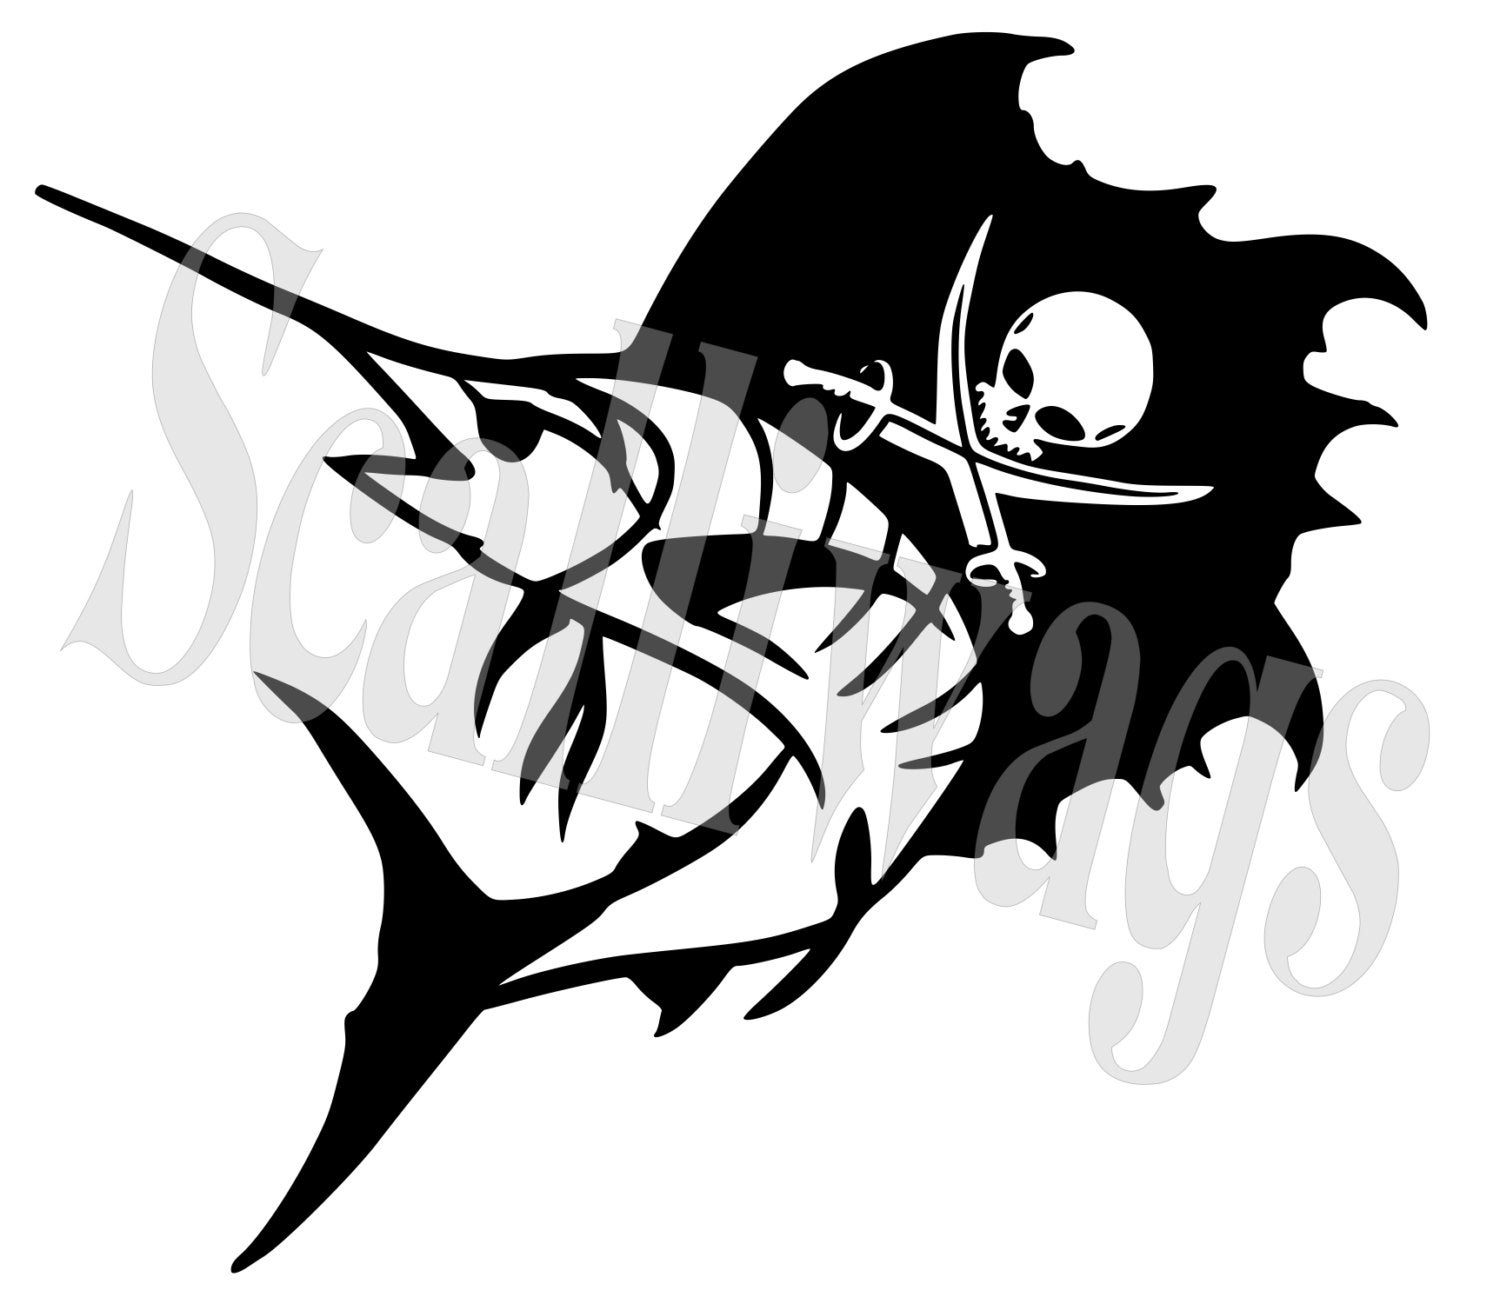 Florida Fishing Marlin Swordfish Vinyl Car Decal Sticker Graphic